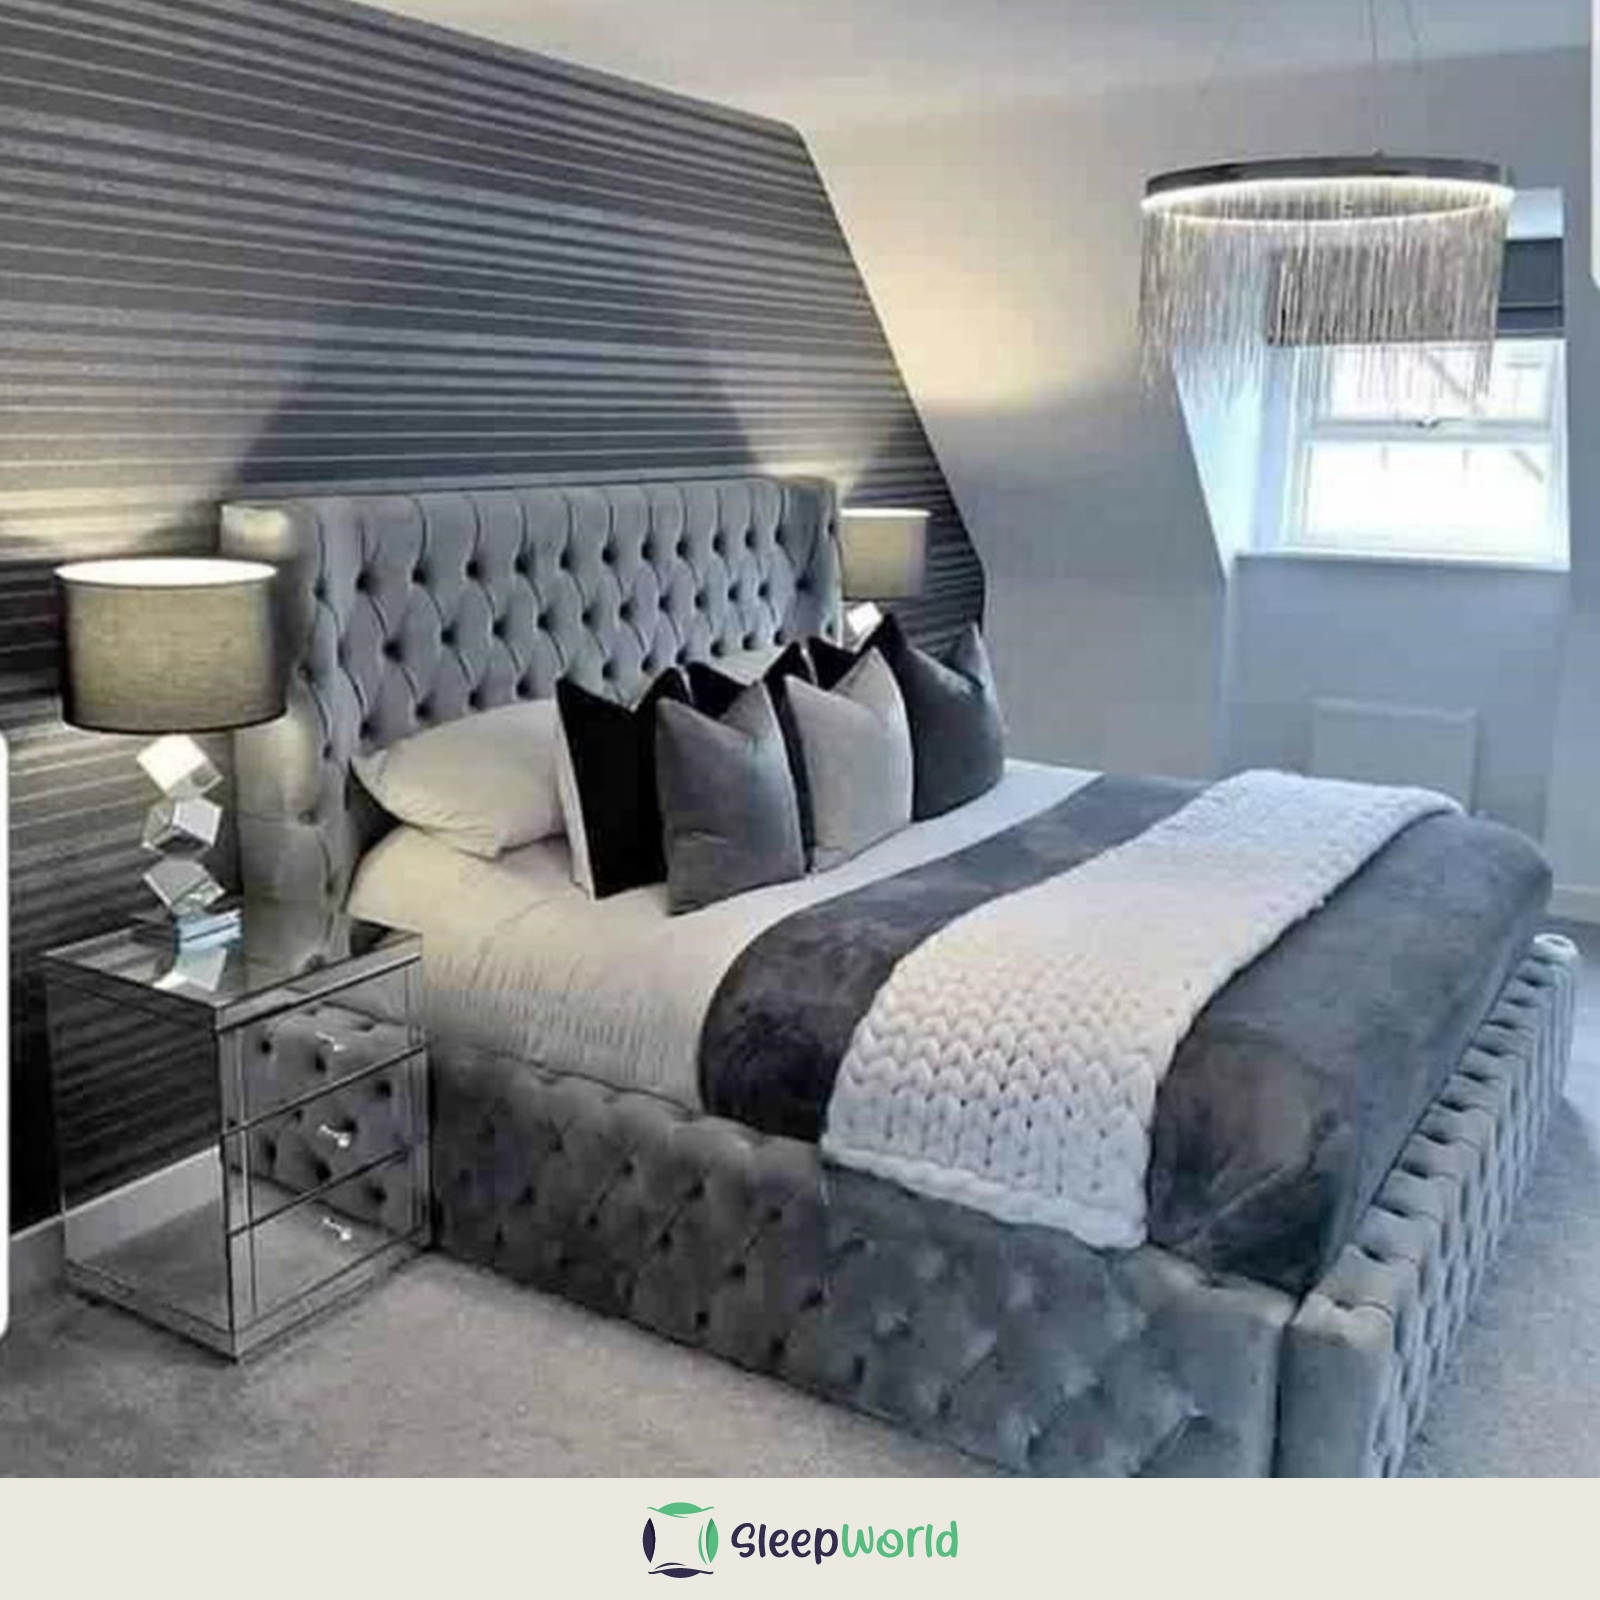 Ambassador Bed – Single – 3FT – Gas Lift Ottoman Base – Optional Mattress – Upholstered – Sleep World Furniture